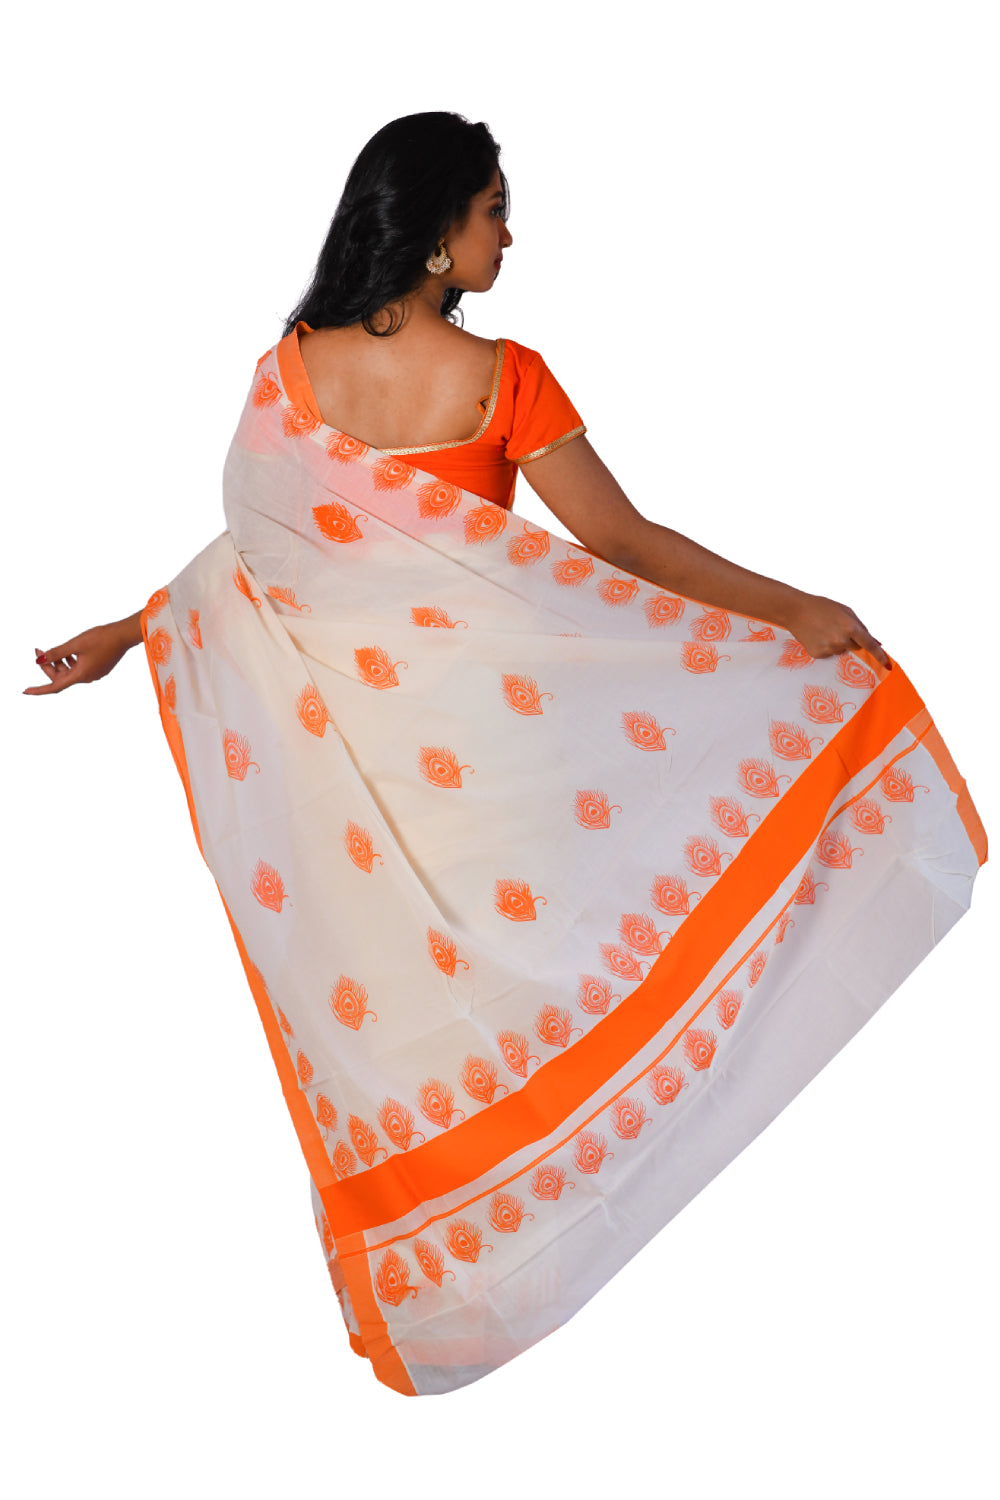 Kerala Saree with Orange Peacock Feather Block Print